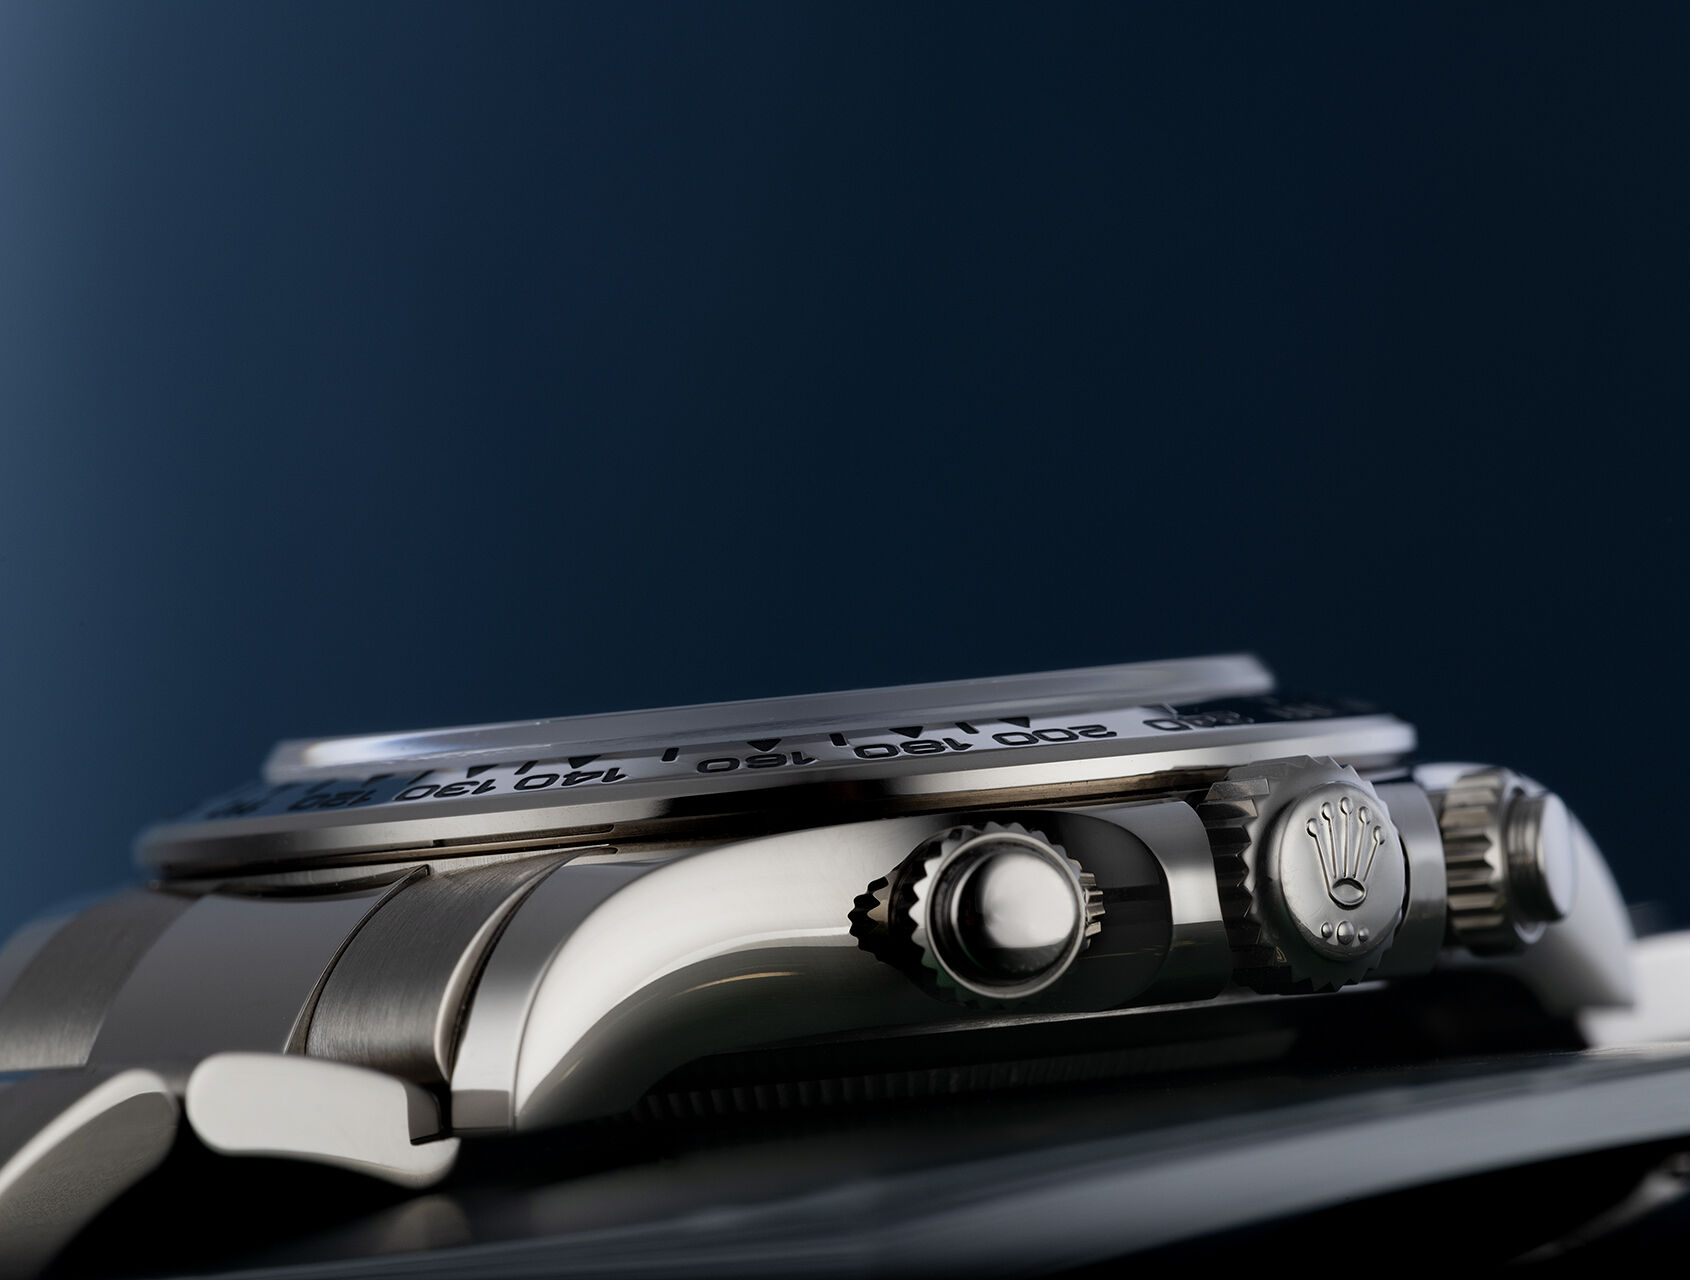 ref 116509 | 116509 - Brand New | Rolex Cosmograph Daytona